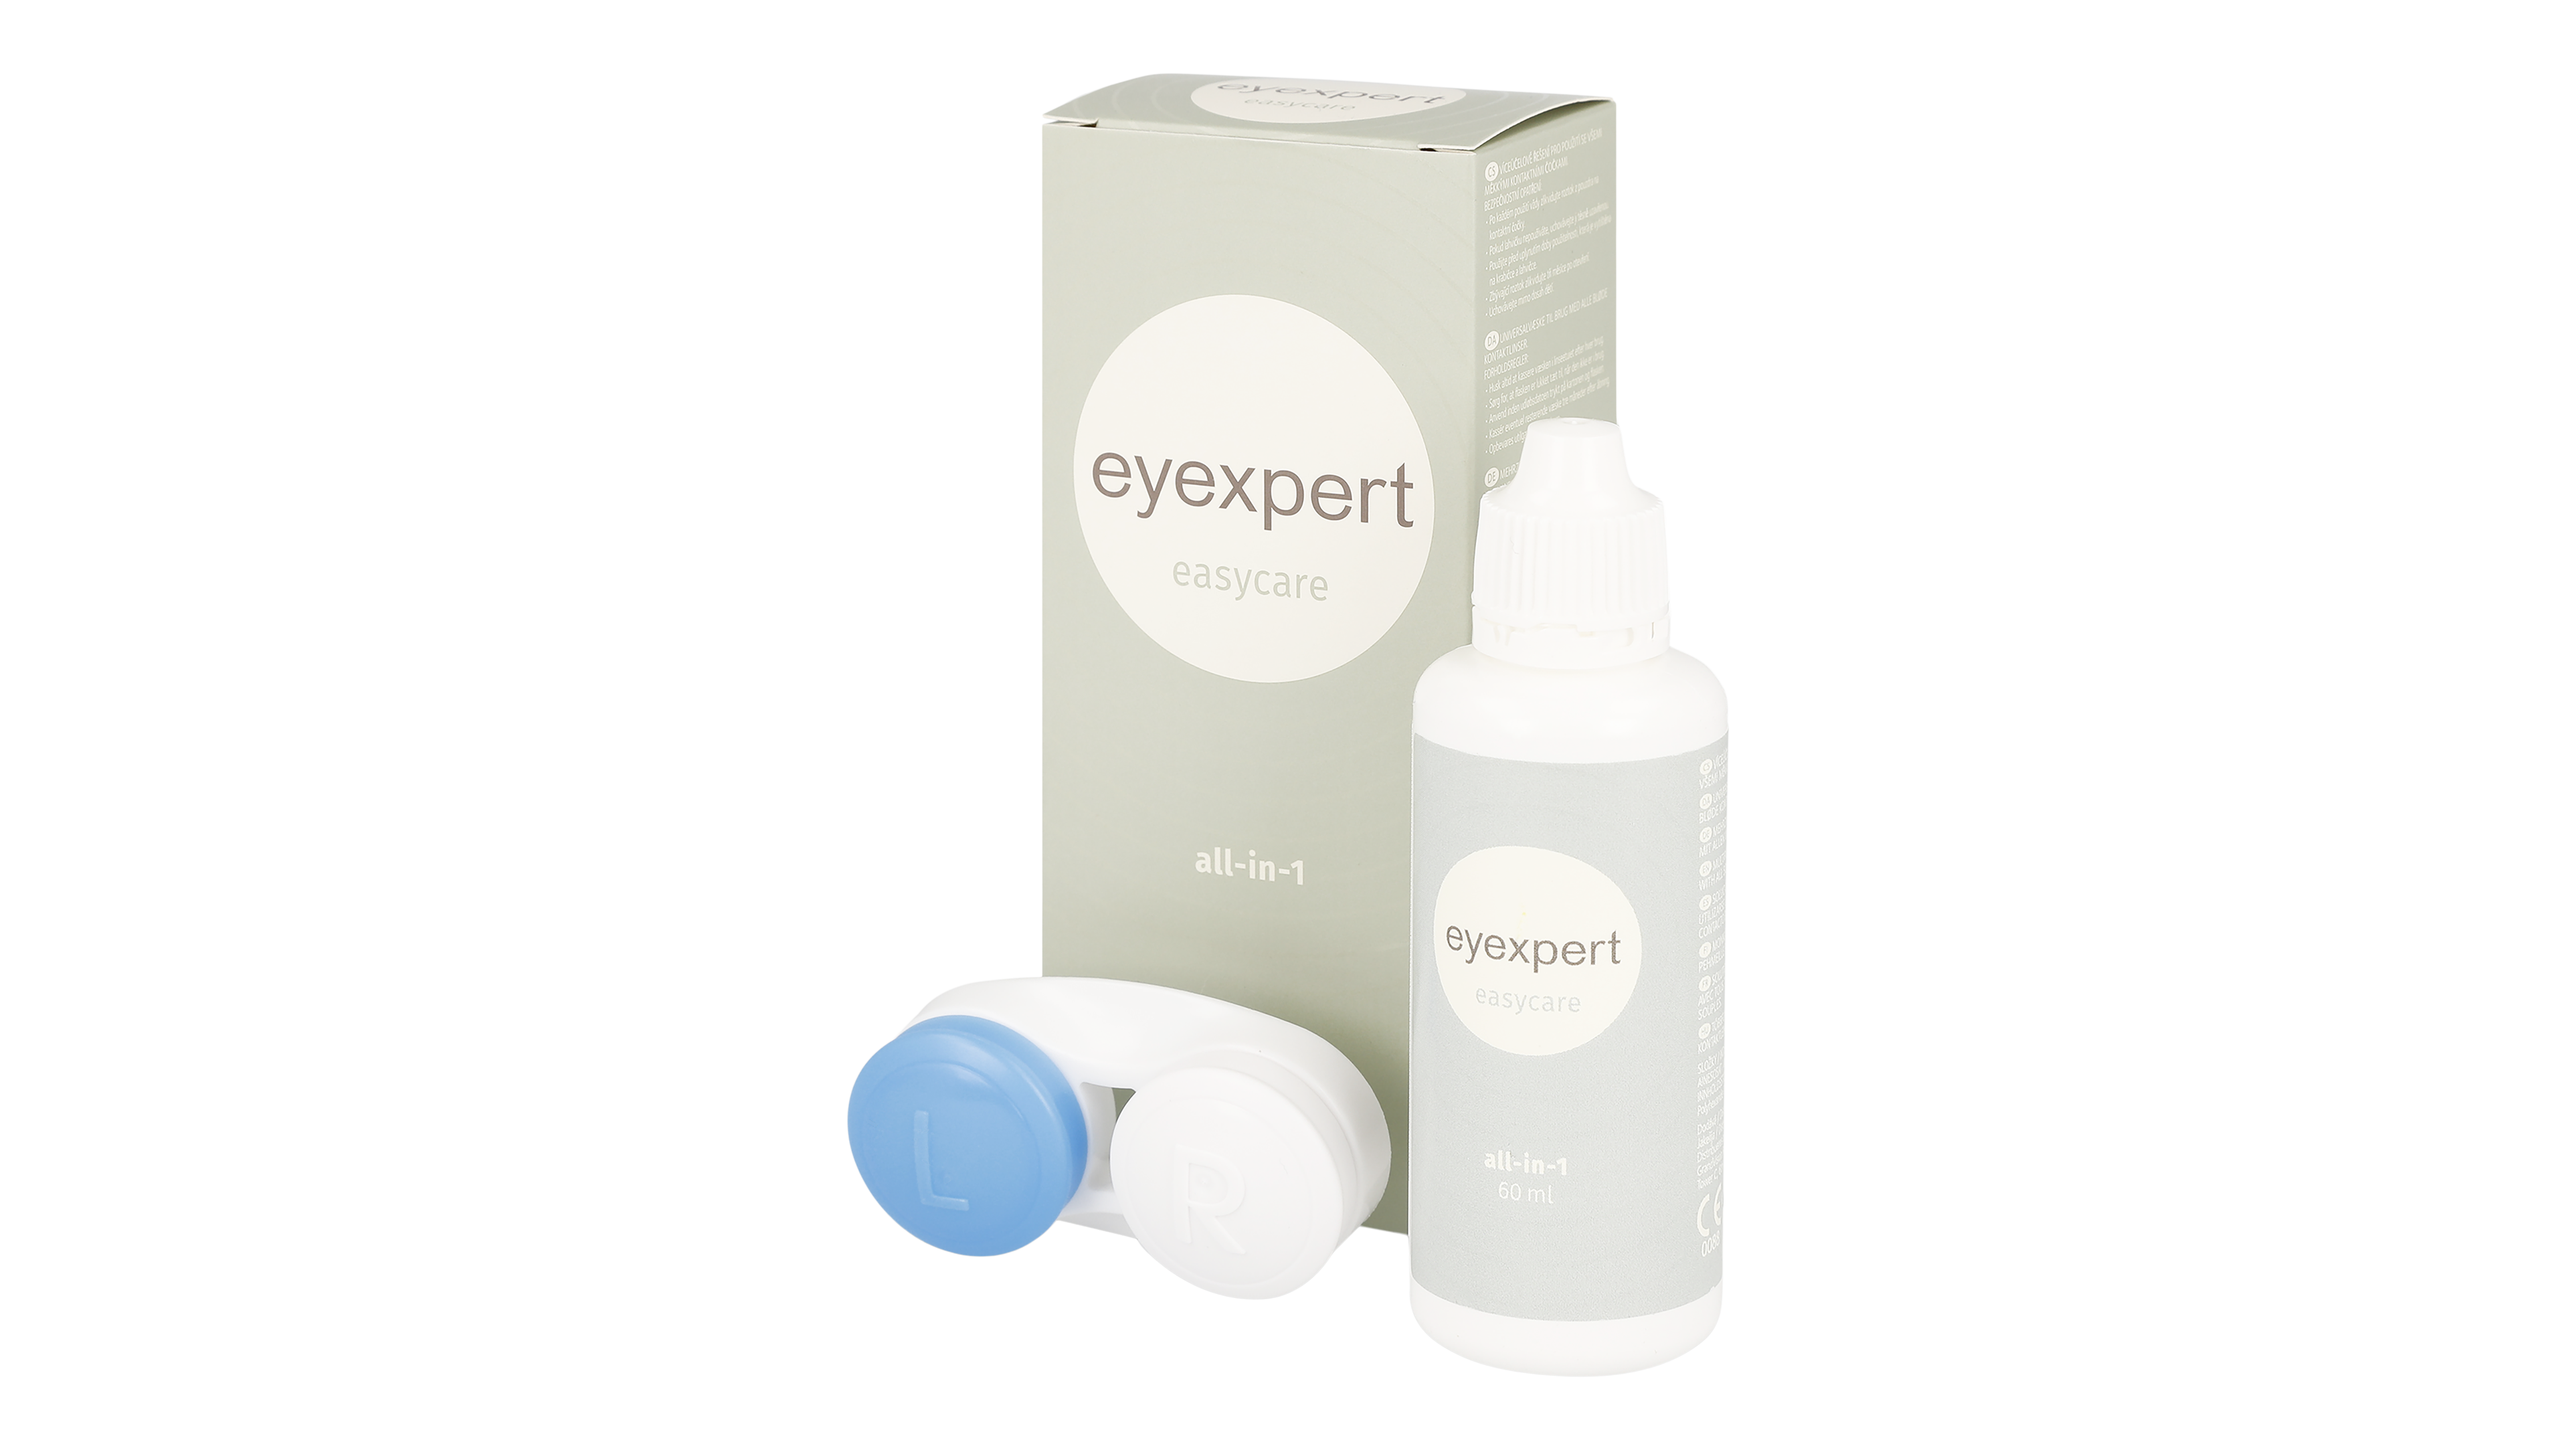 Open_Box Eyexpert Eyexpert Easycare 60ml